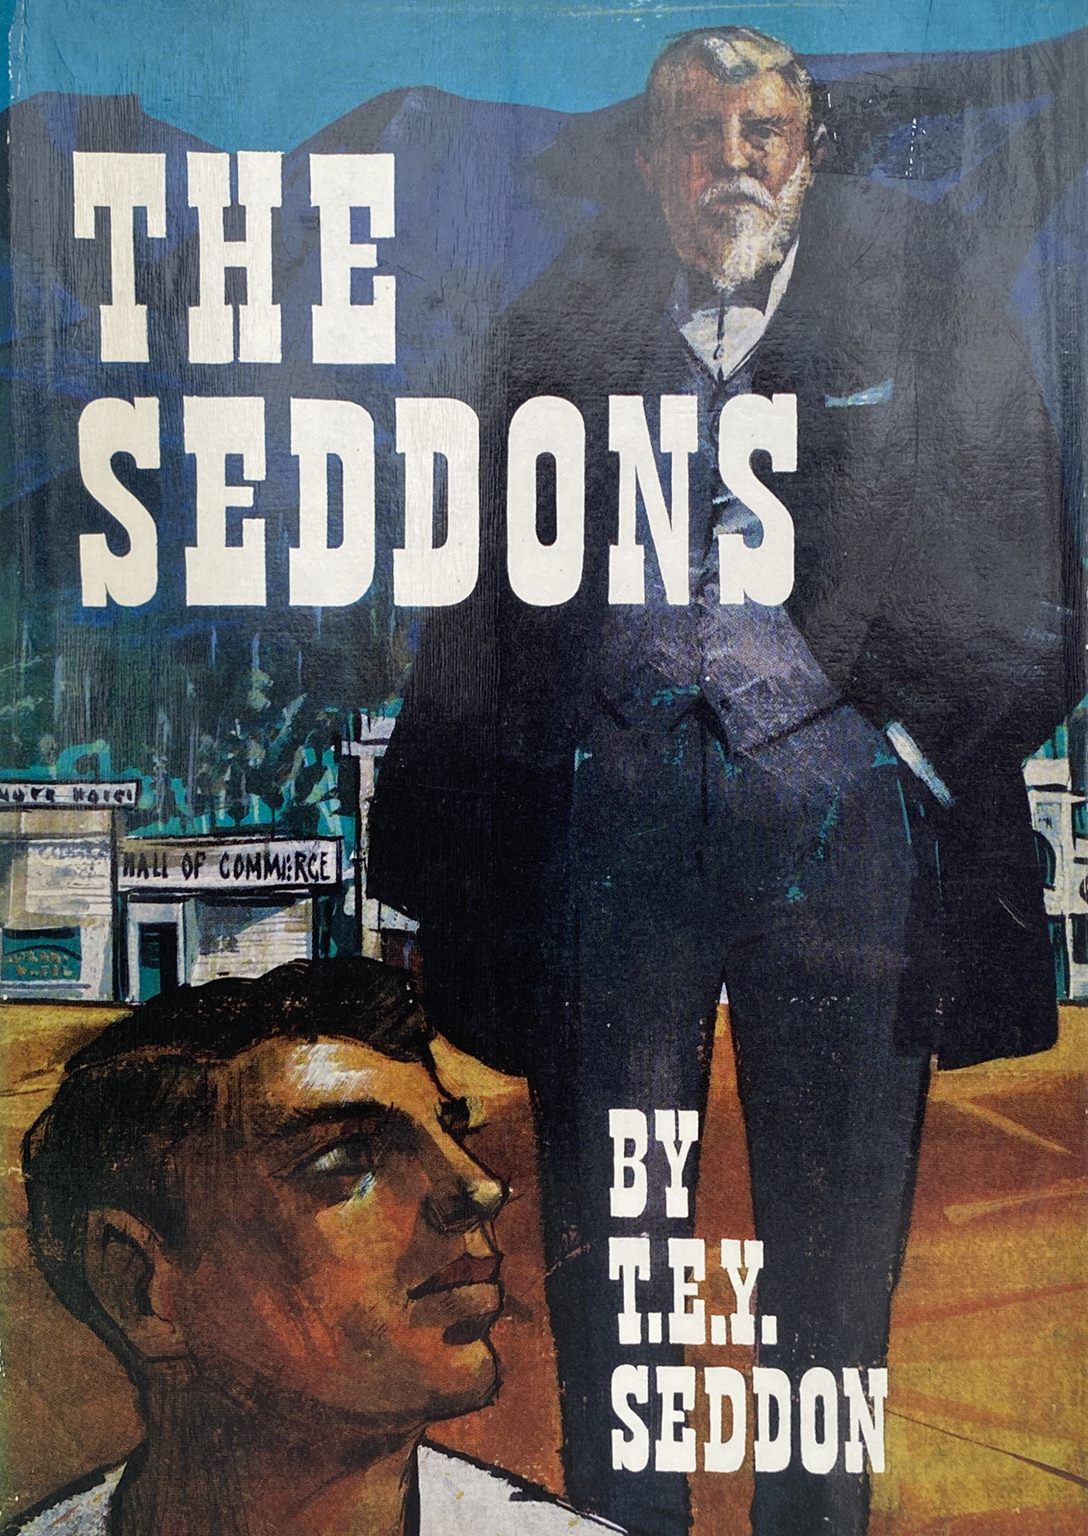 THE SEDDONS